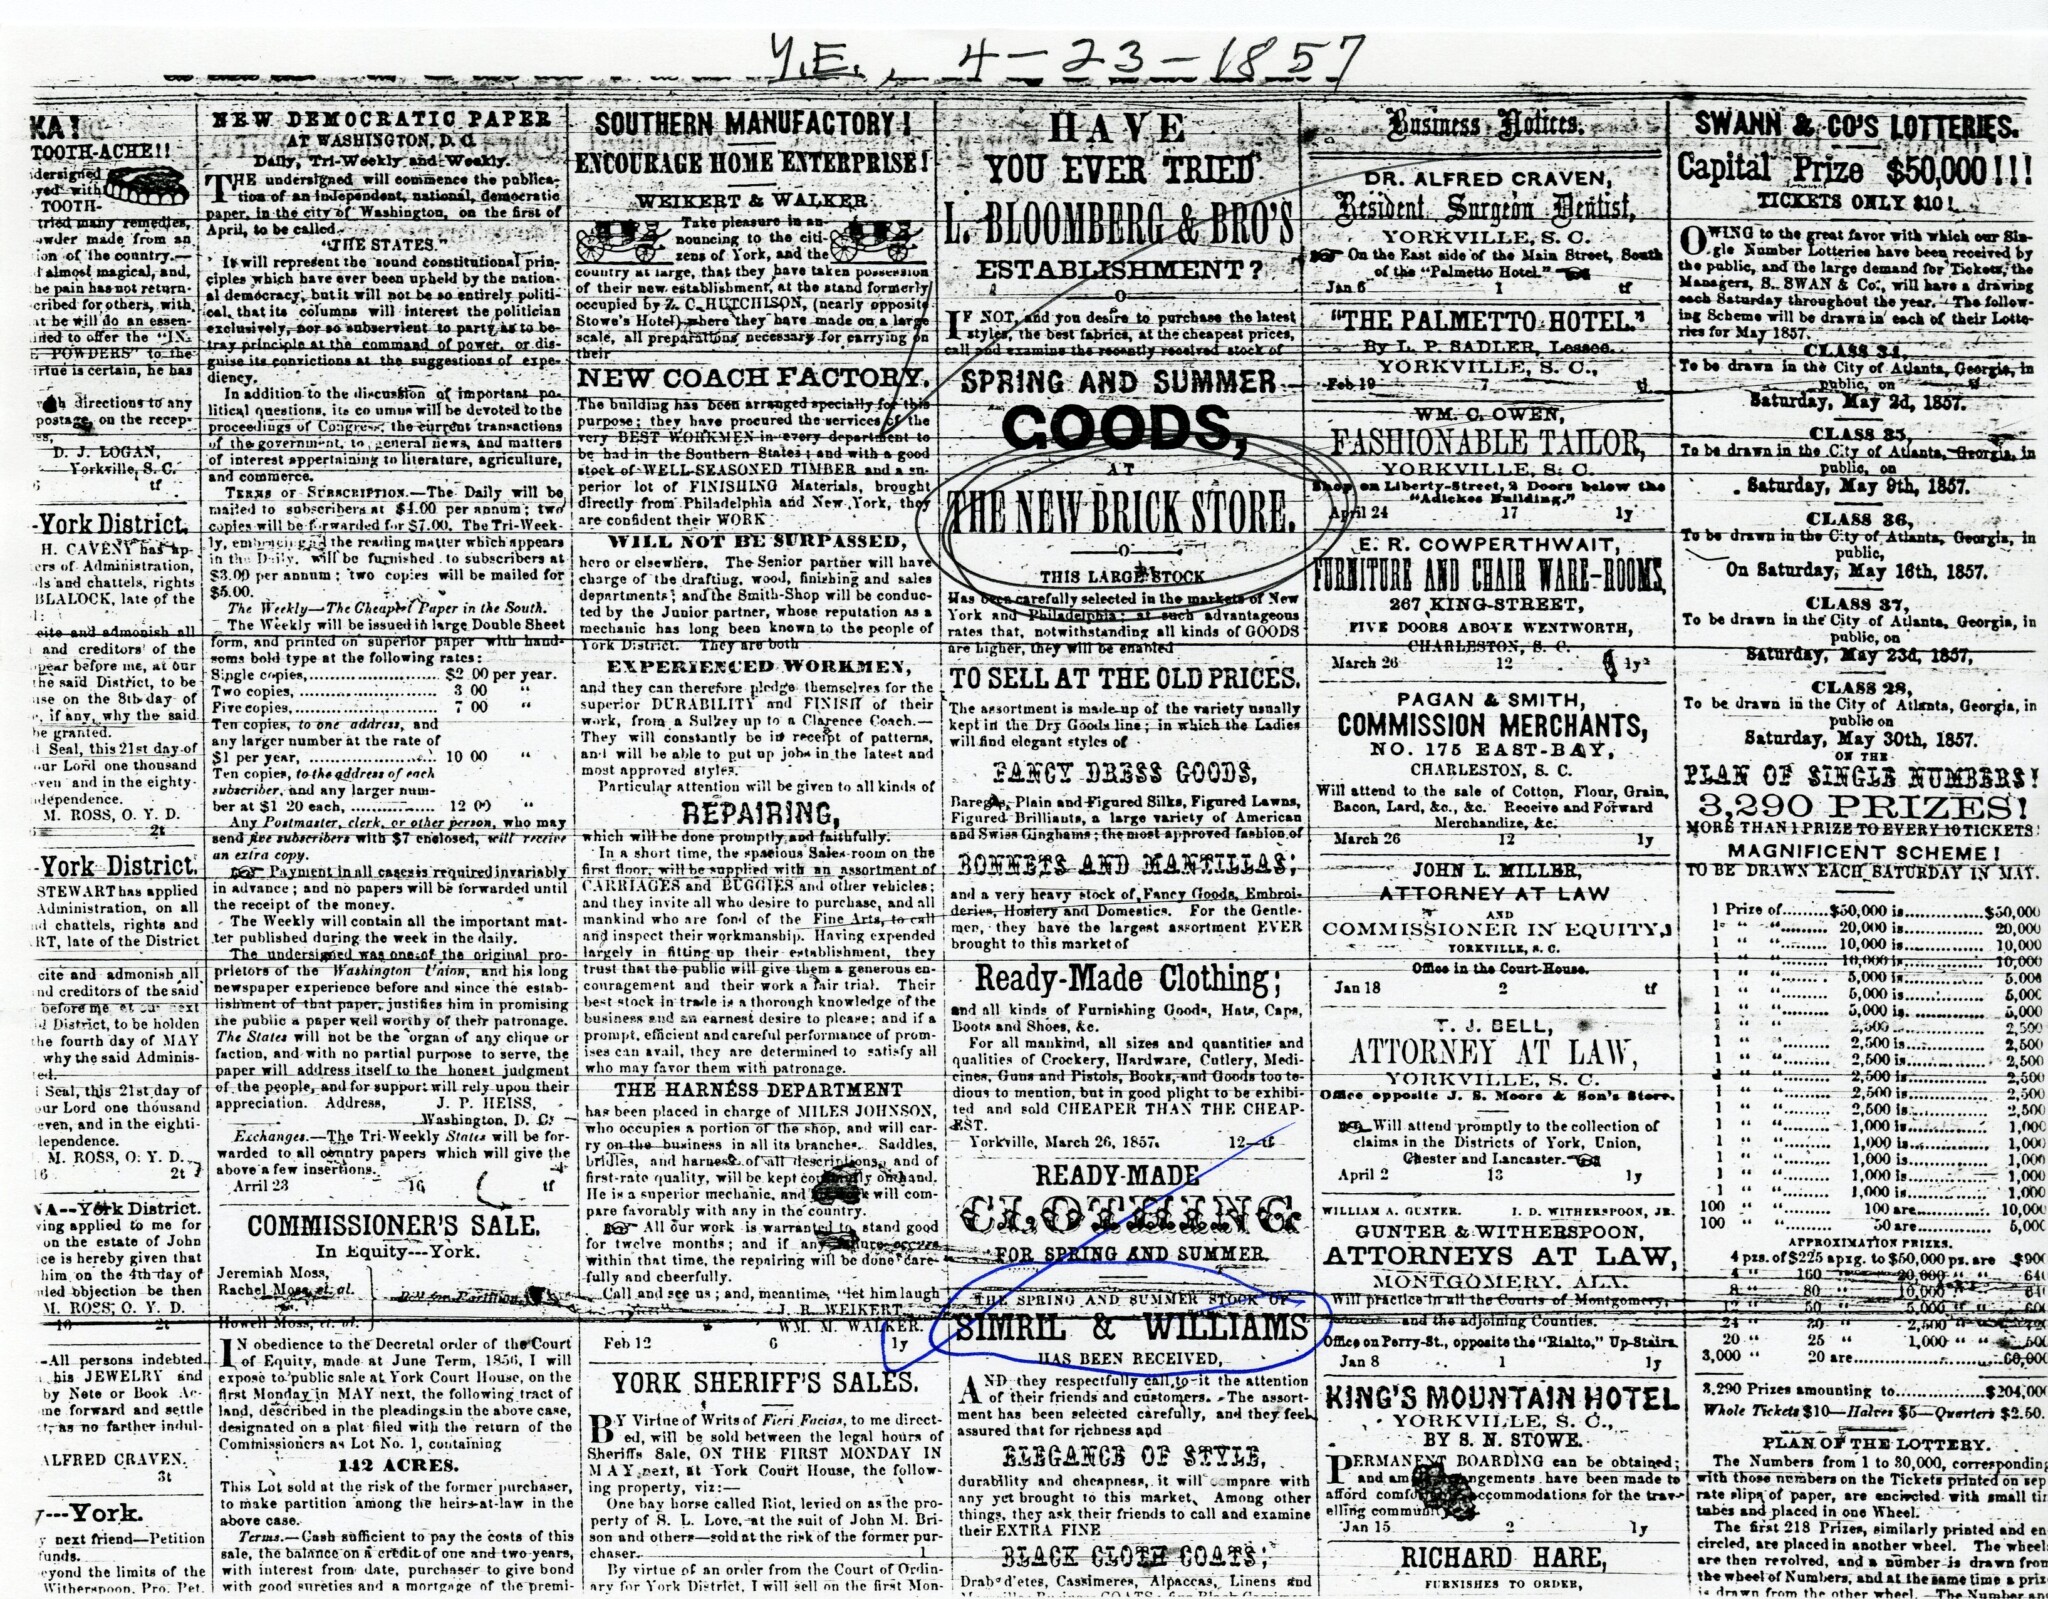 Alfred Craven - Dentist Advertises in Yorkville Enquirer - 1857